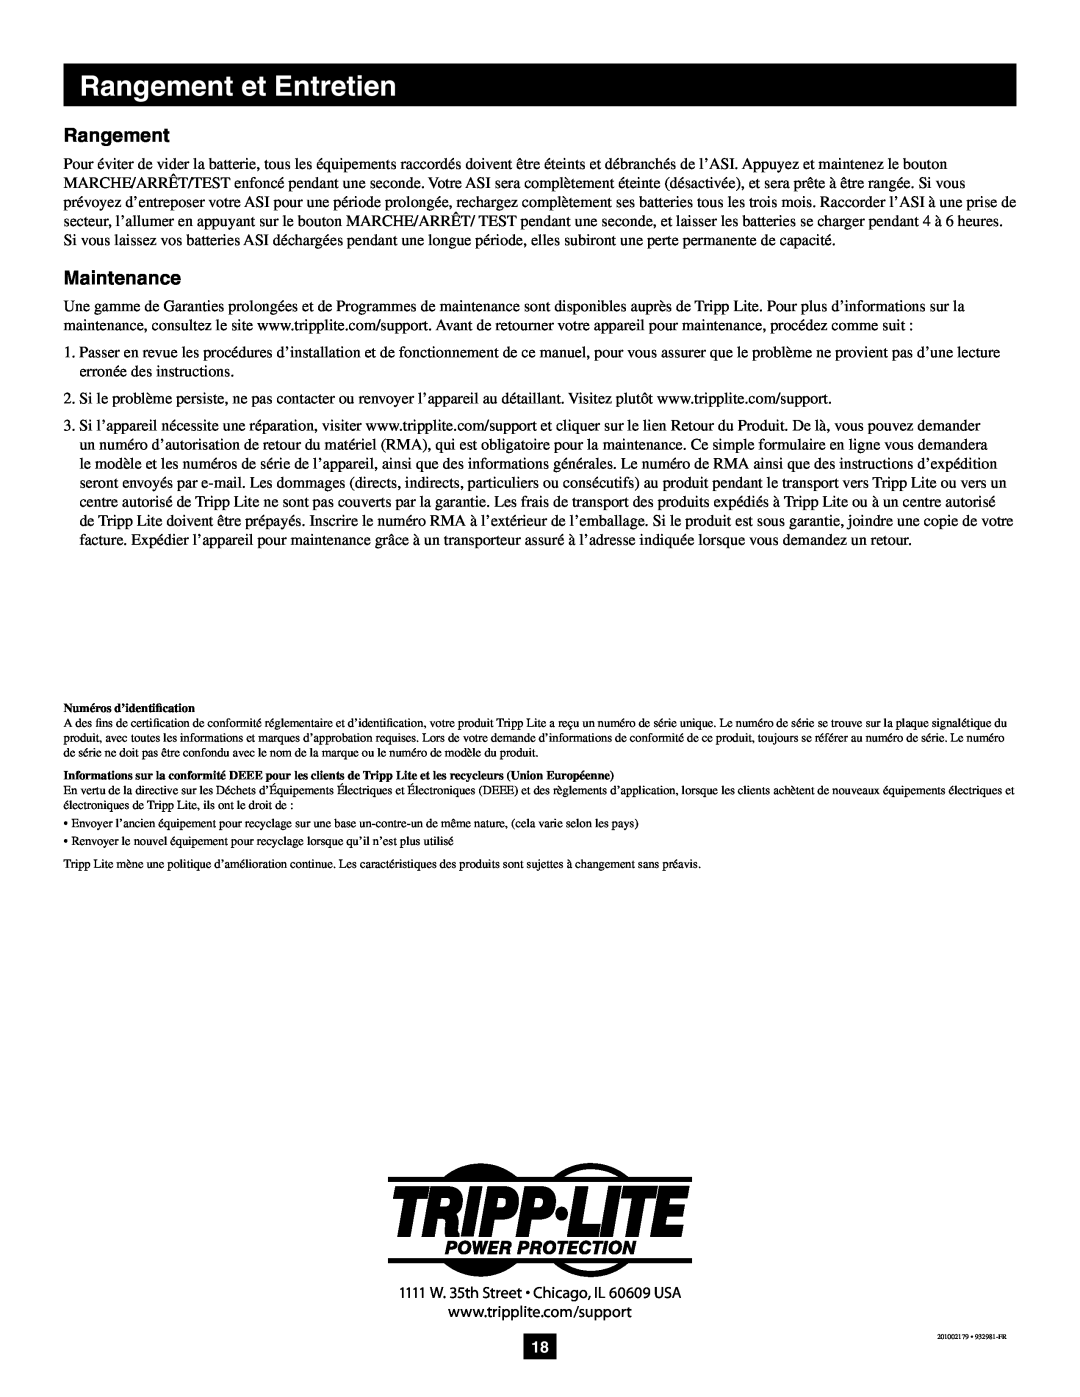 Tripp Lite AVRX750U, AVRX550U owner manual Rangement et Entretien, Maintenance 